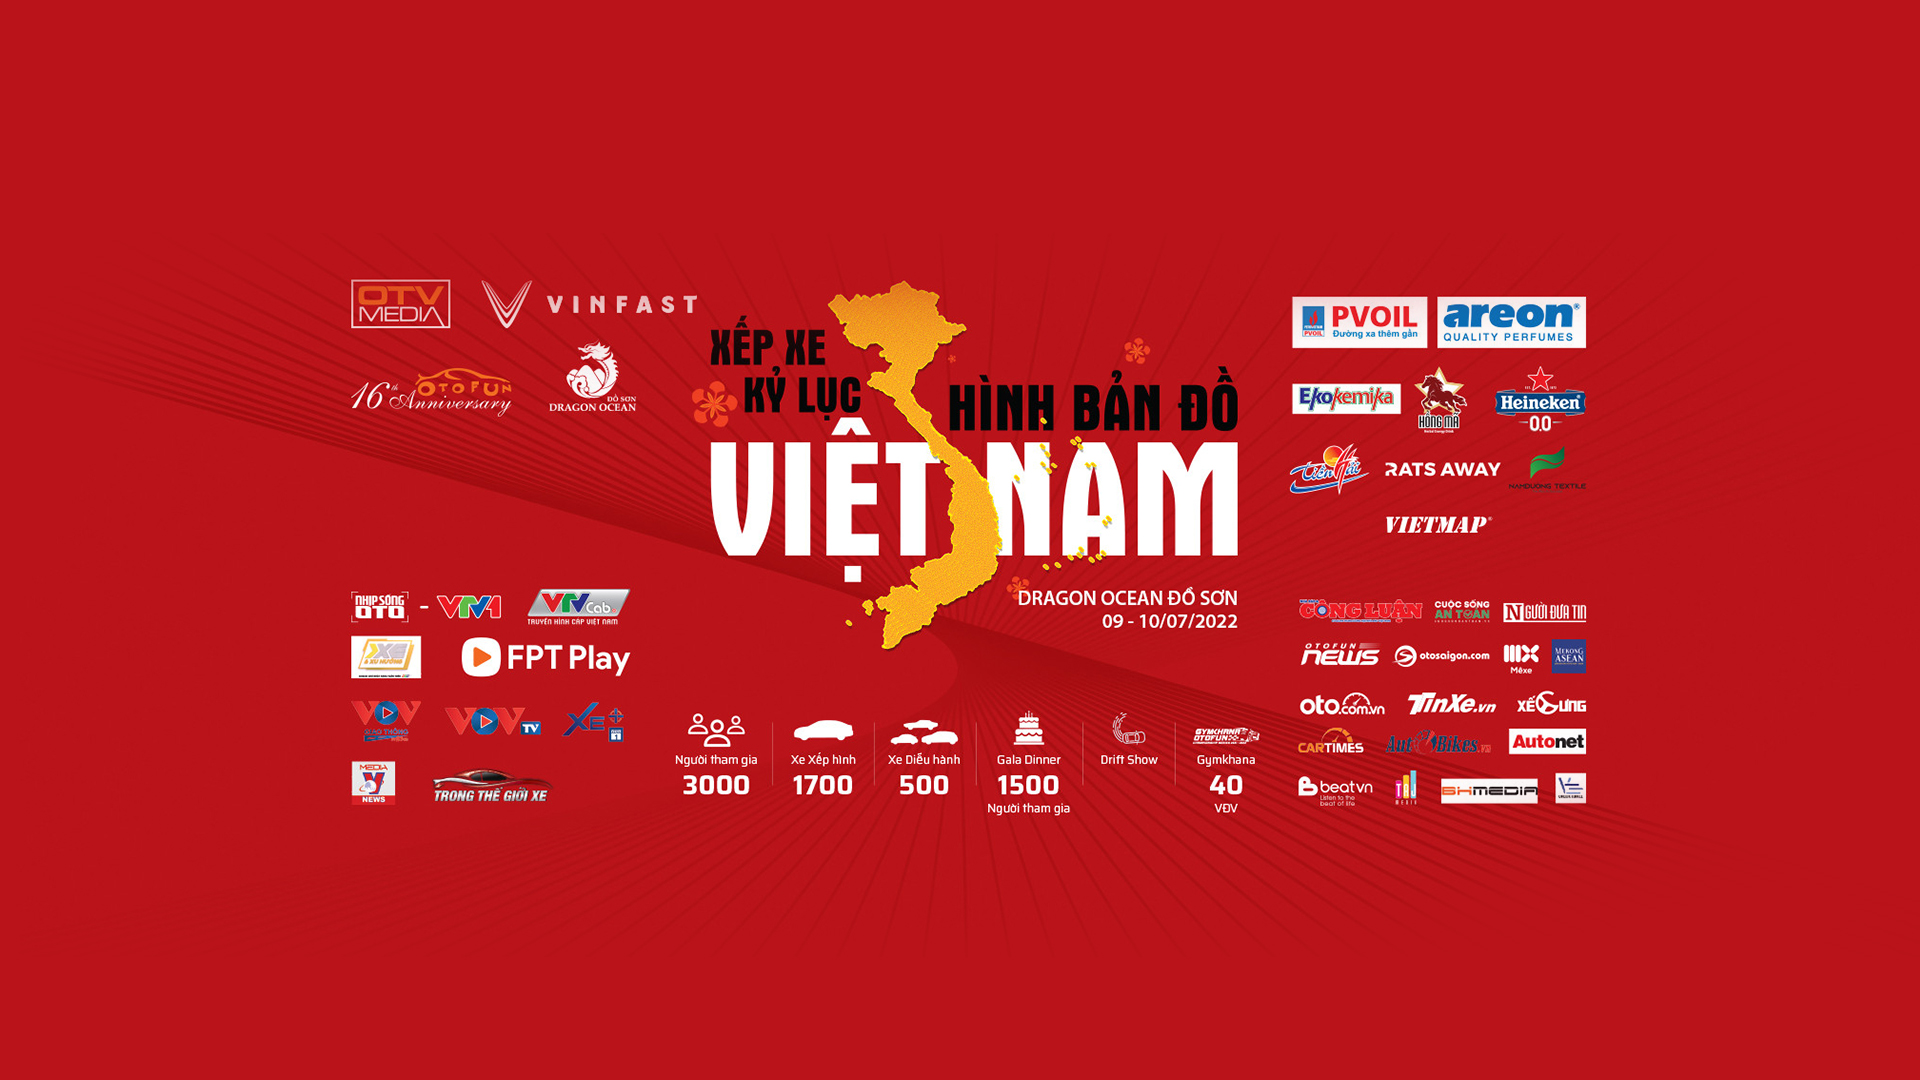 Xếp xe kỉ lục bản đồ Việt Nam